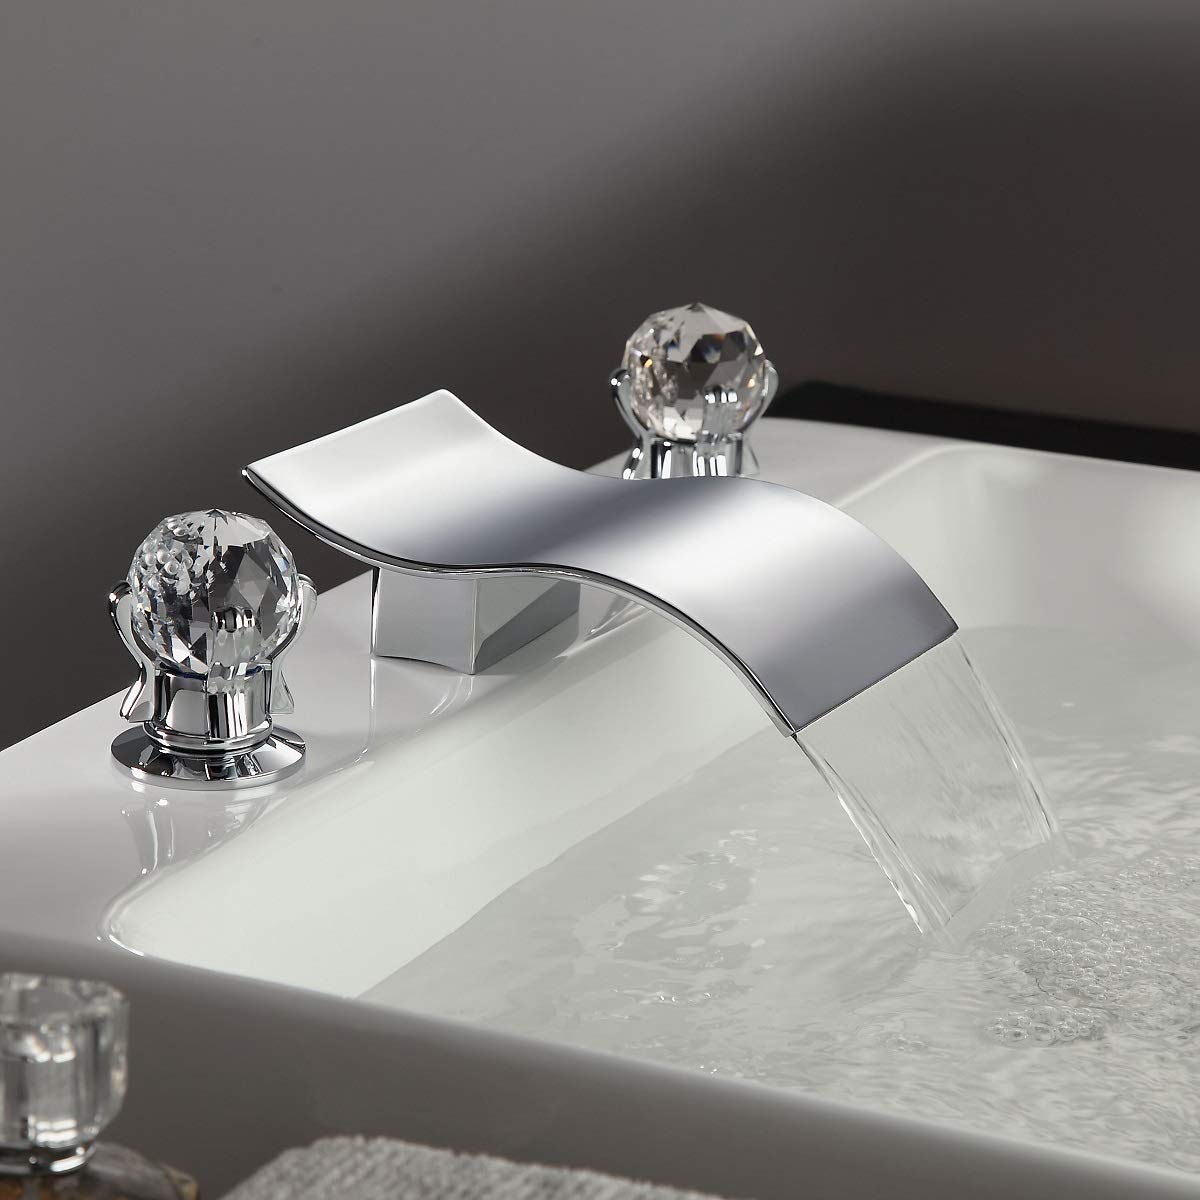 Waterfall Bathroom Sink Faucet with Dual Crystal Handles